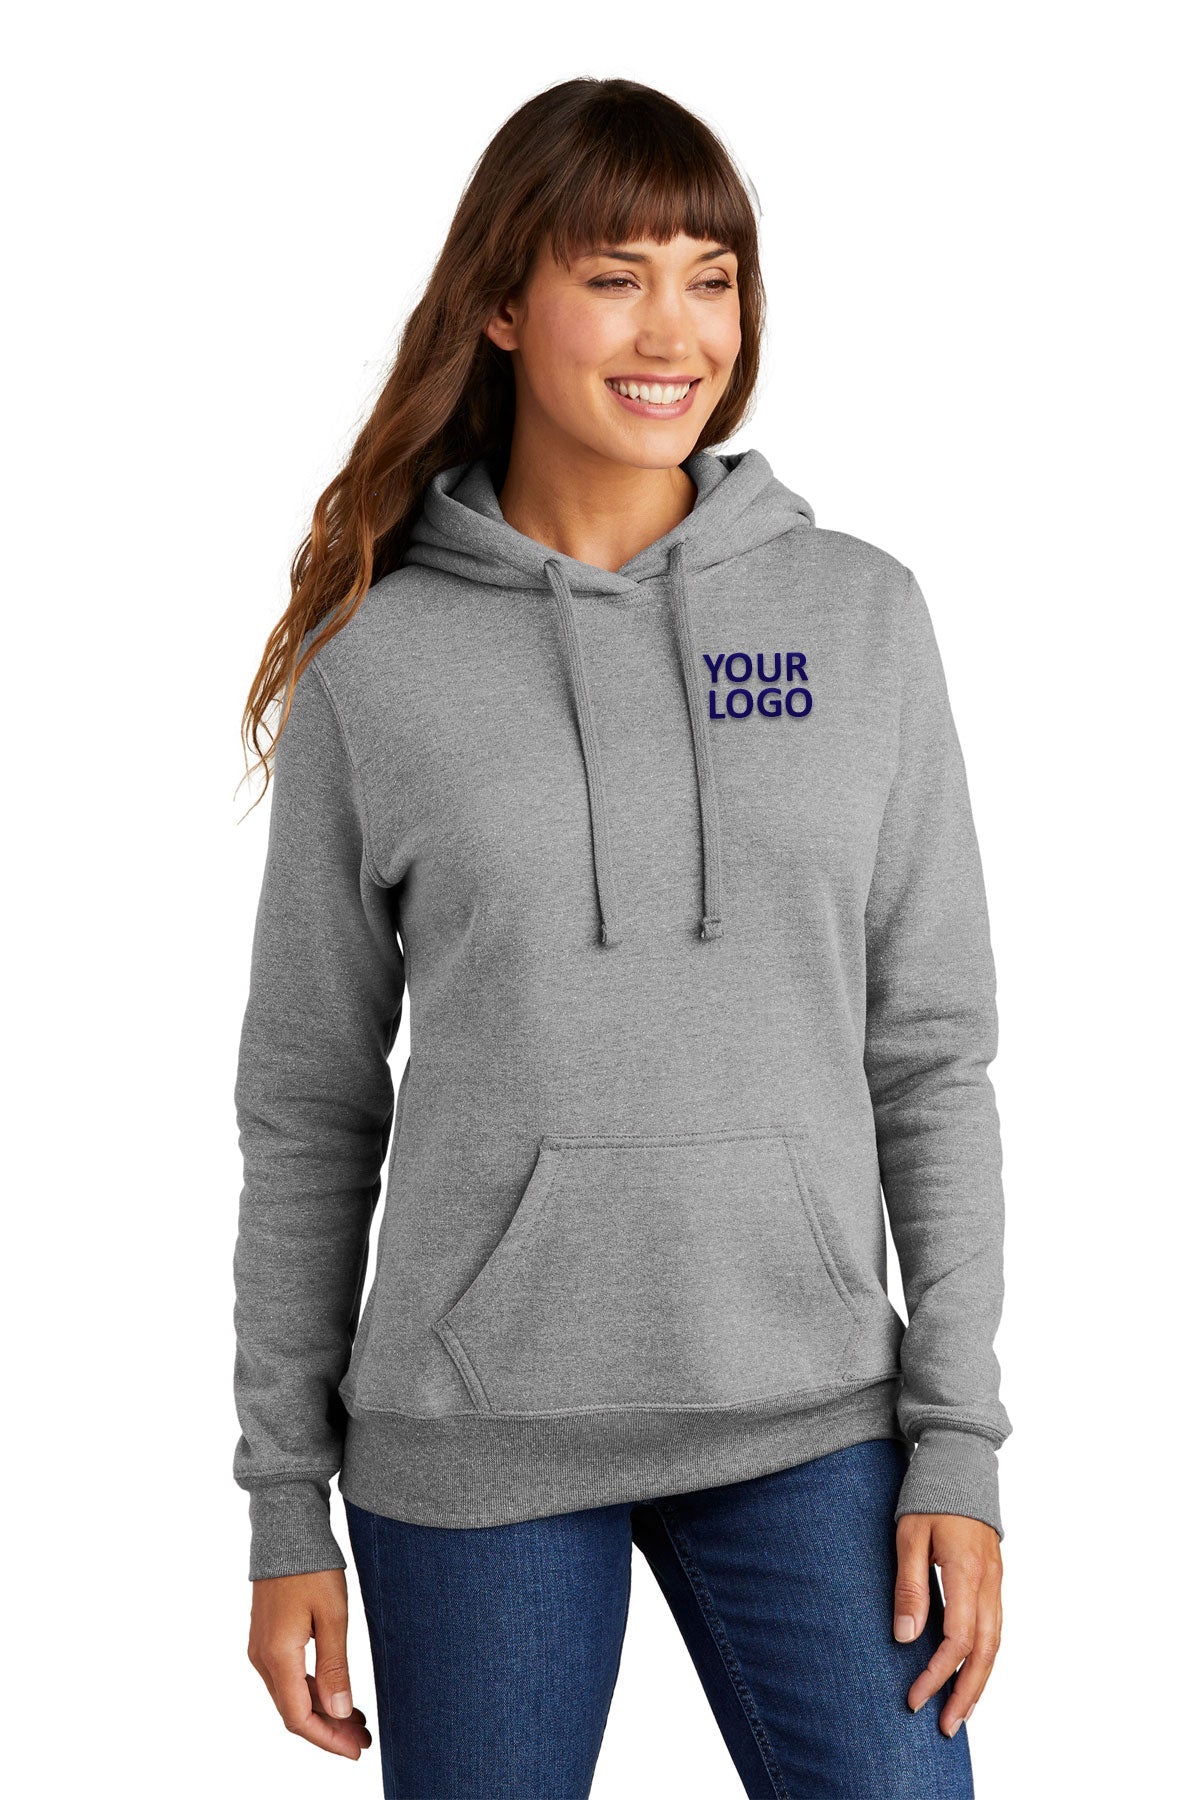 Port & Company Ladies Core Fleece Pullover Hooded Sweatshirt LPC78H Athletic Heather